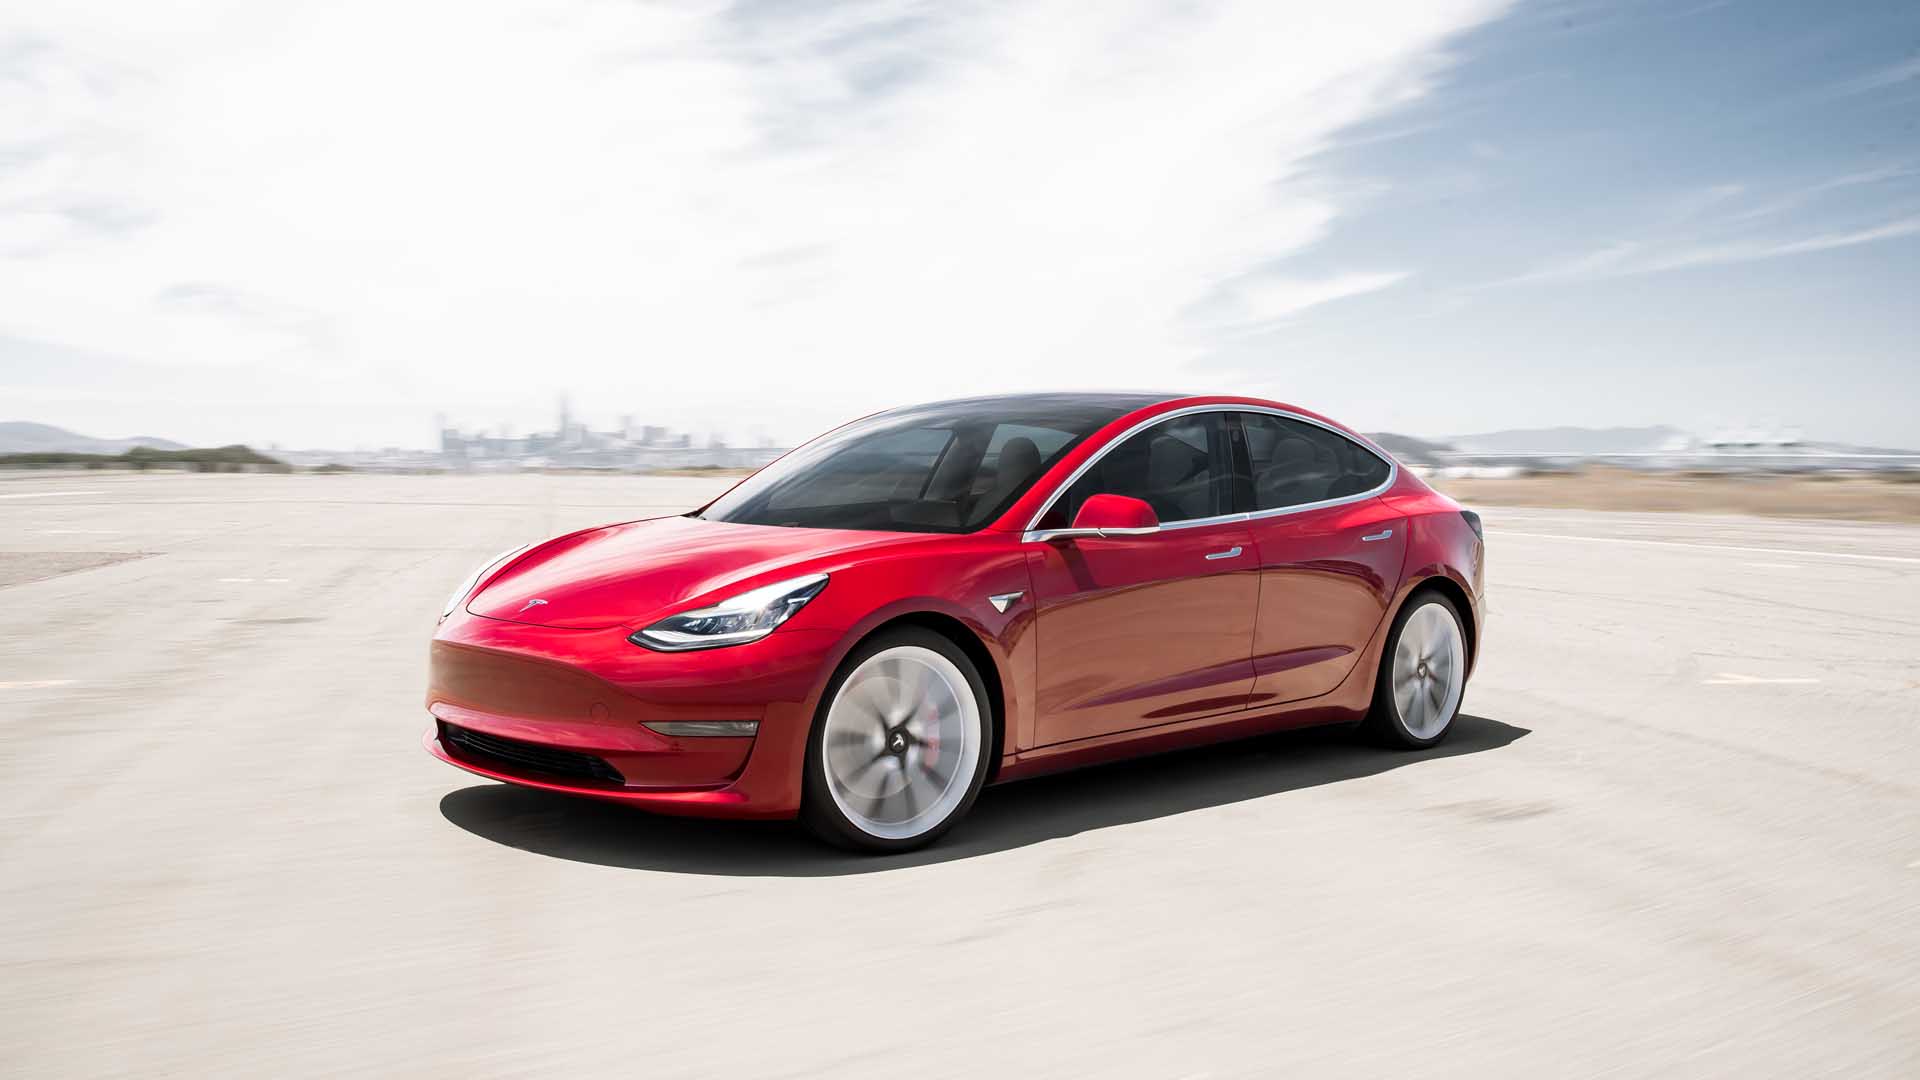 Base Tesla Model 3 gets more range, slower acceleration, $000 price hike vs. earlier this year